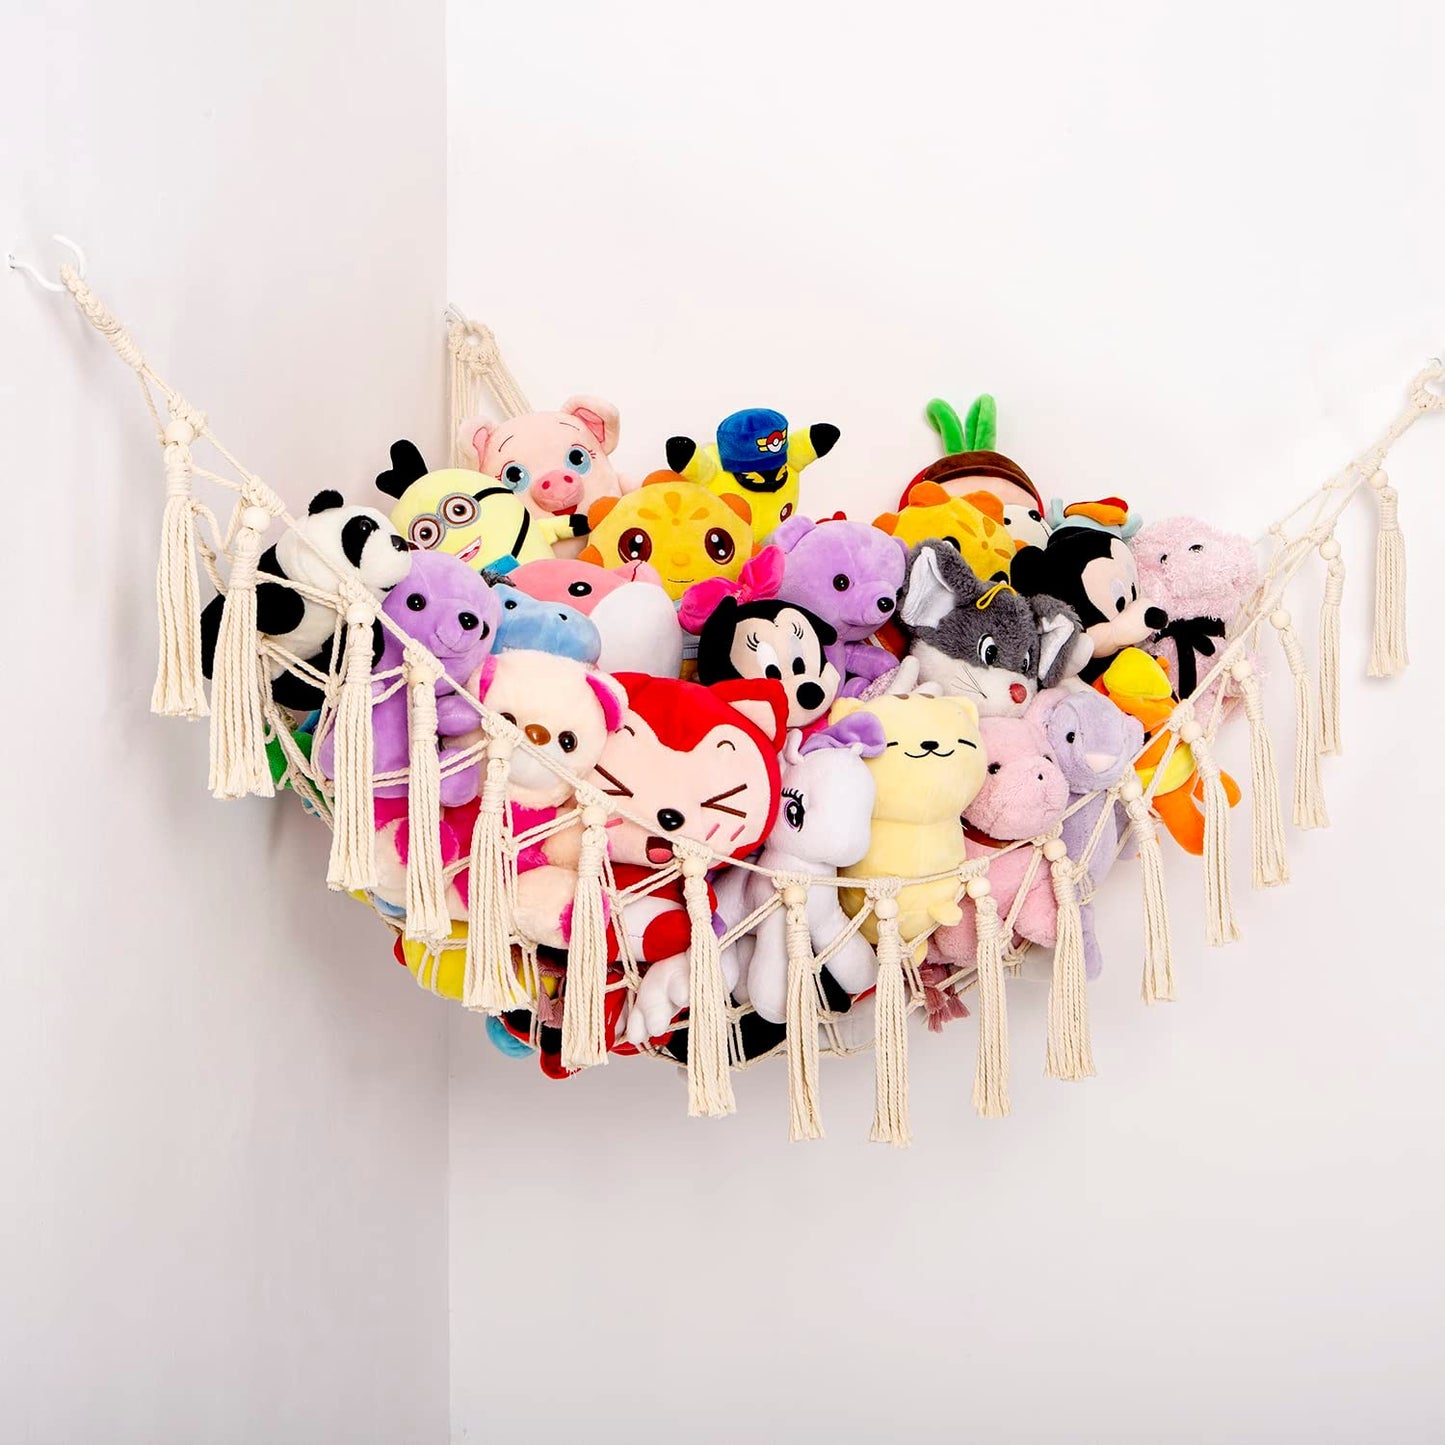 New Toy Hammock for Stuffed Animals Corner Hanging Net Macrame Organizer Pet for Storage Display Plush Holder Boho Decor for Nursery Playroom Bedroom Kids Room